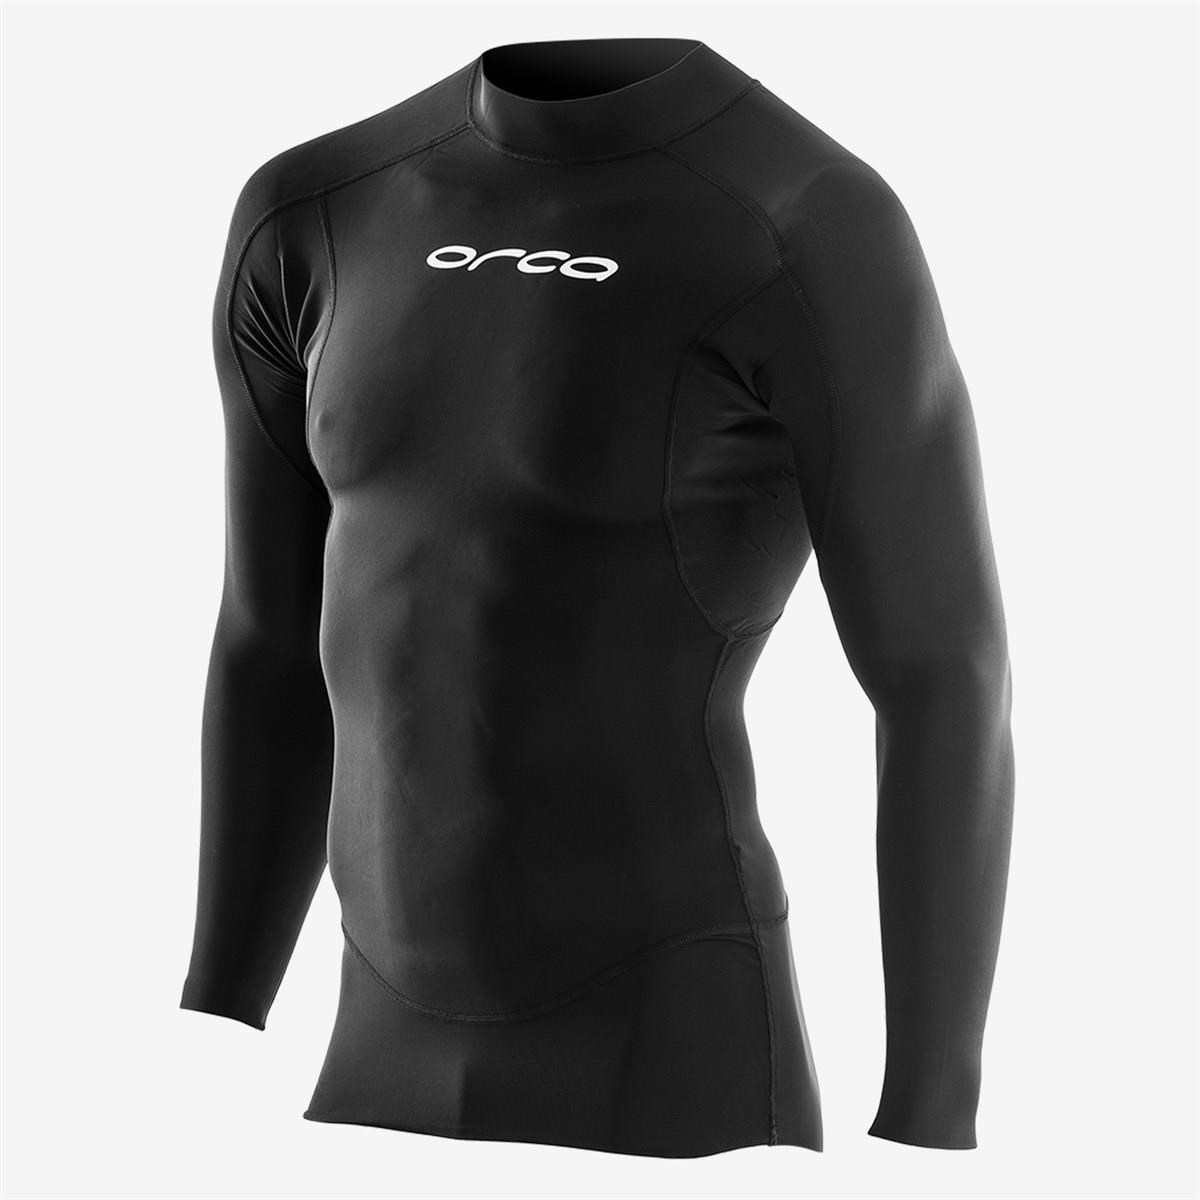 Orca Wetsuit Base Layer product image